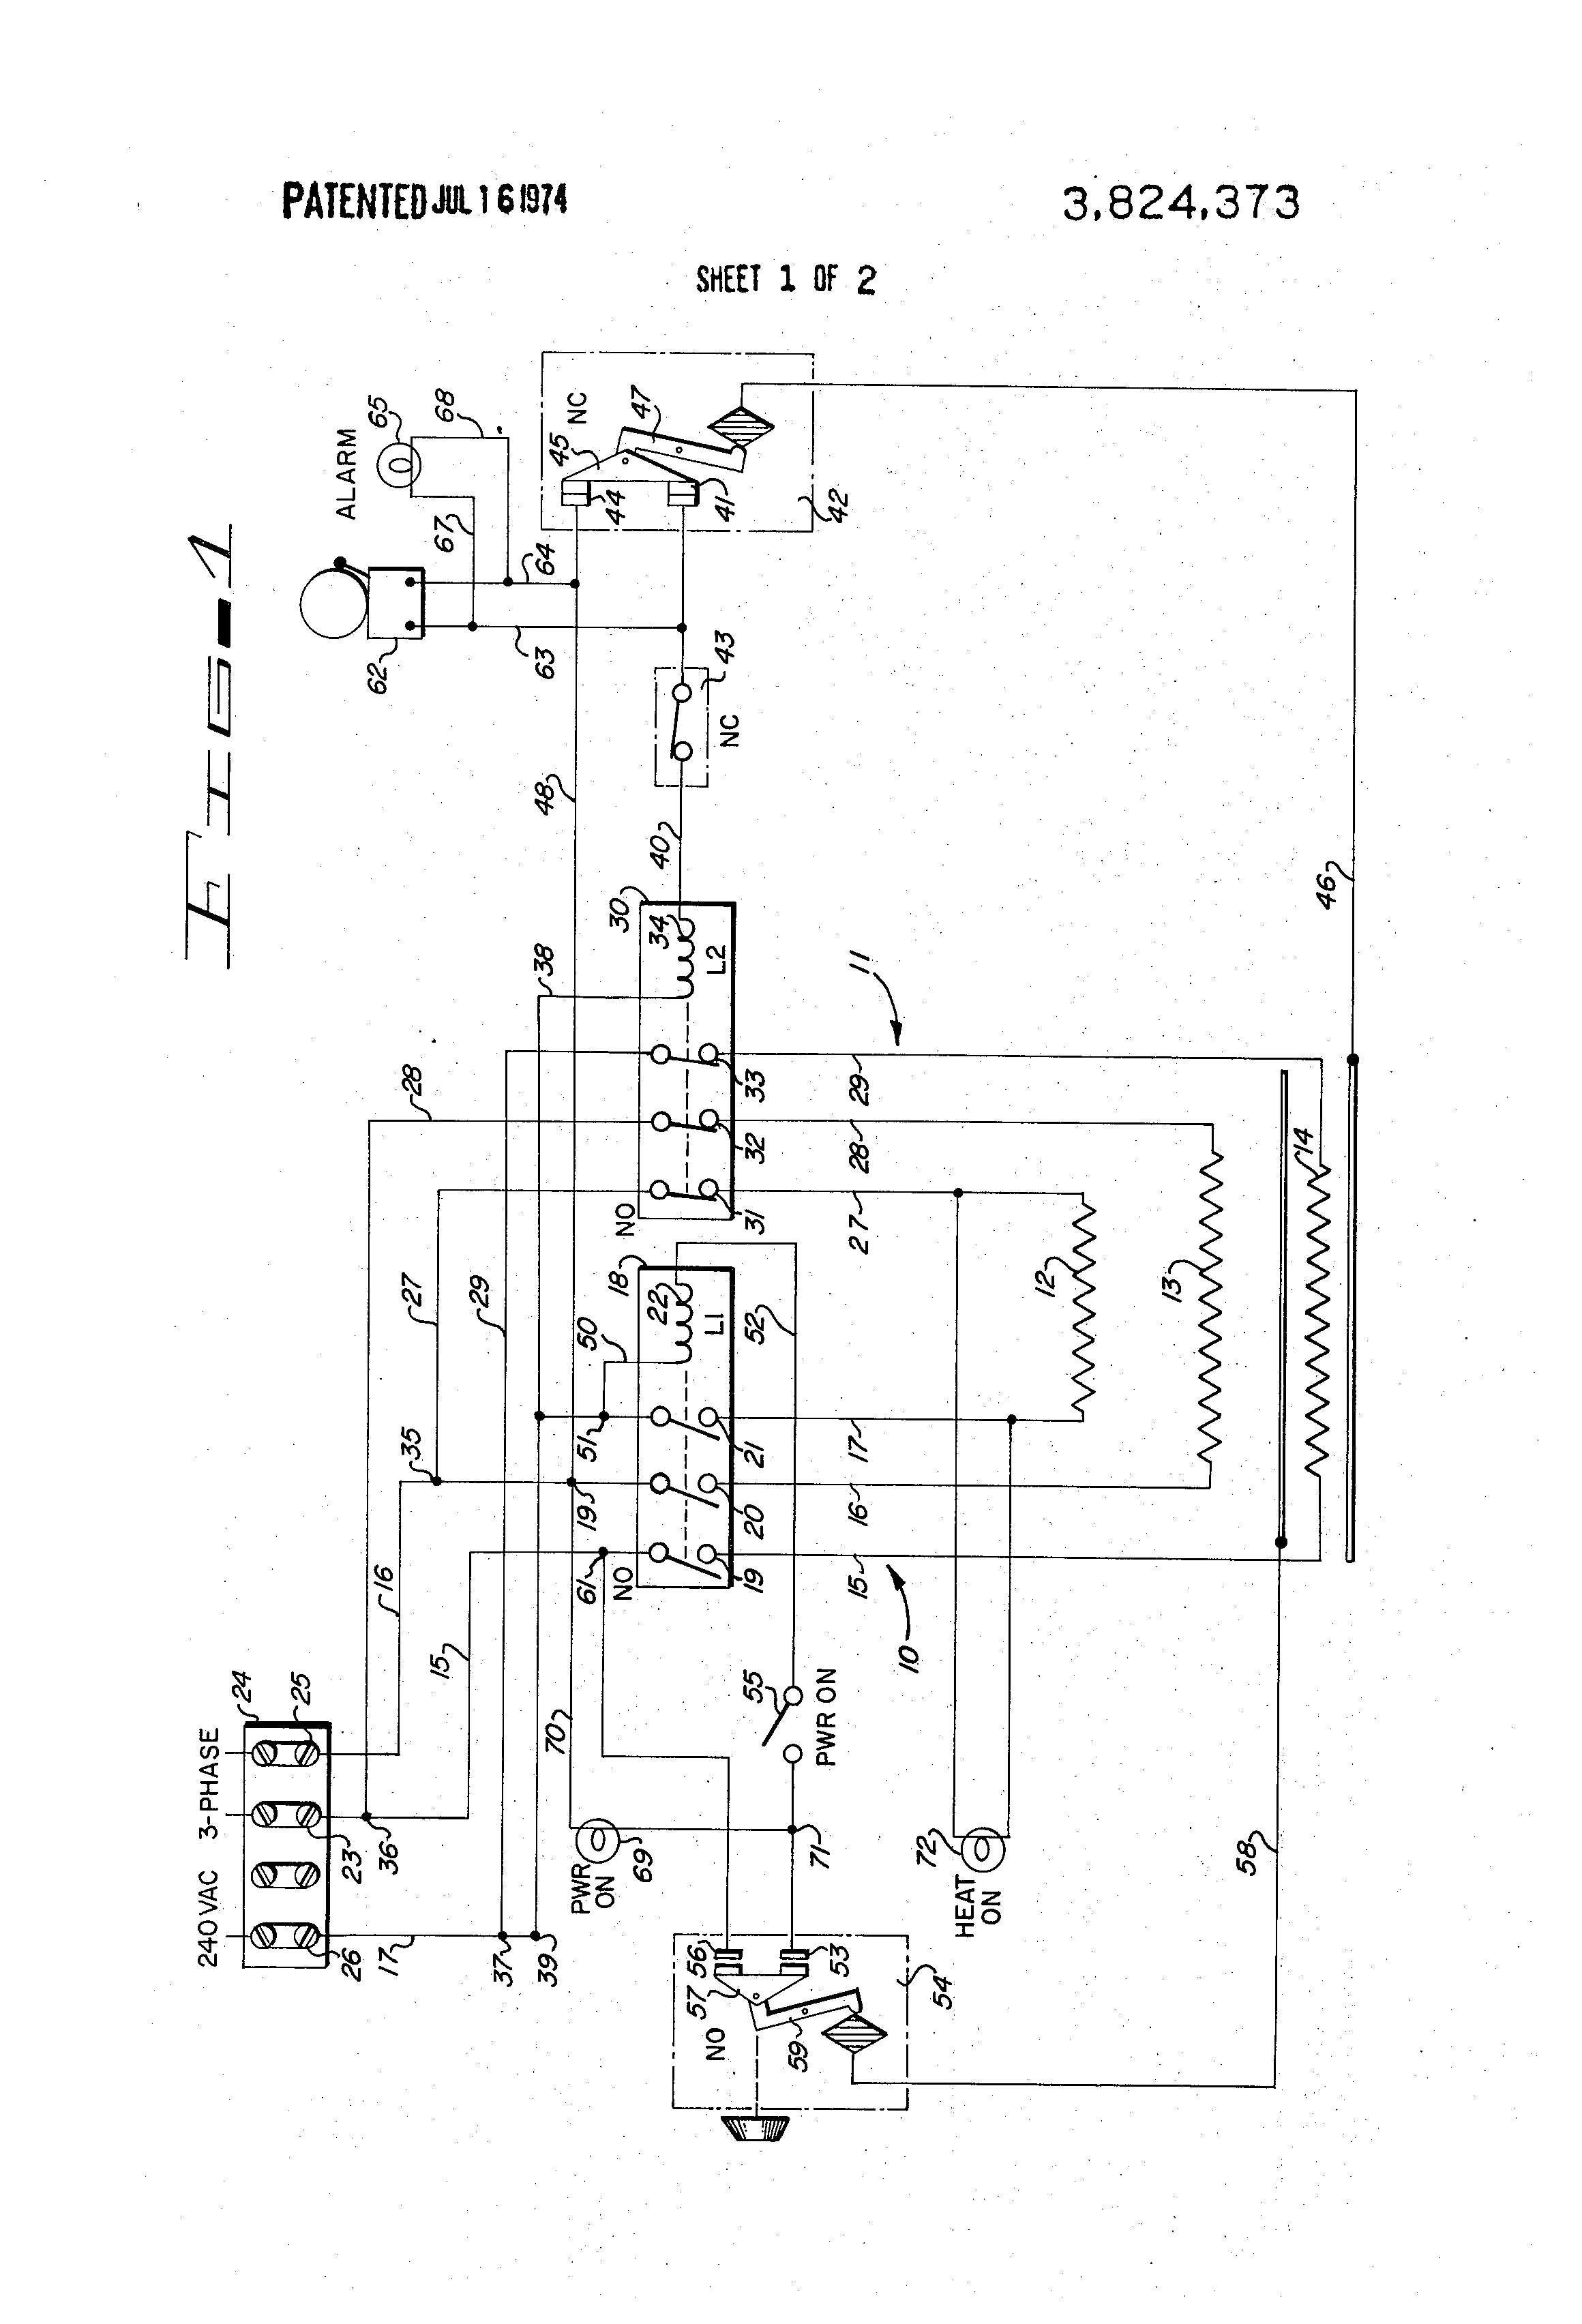 Imperial Deep Fryer Wiring Diagram - Wiring Diagram Pictures